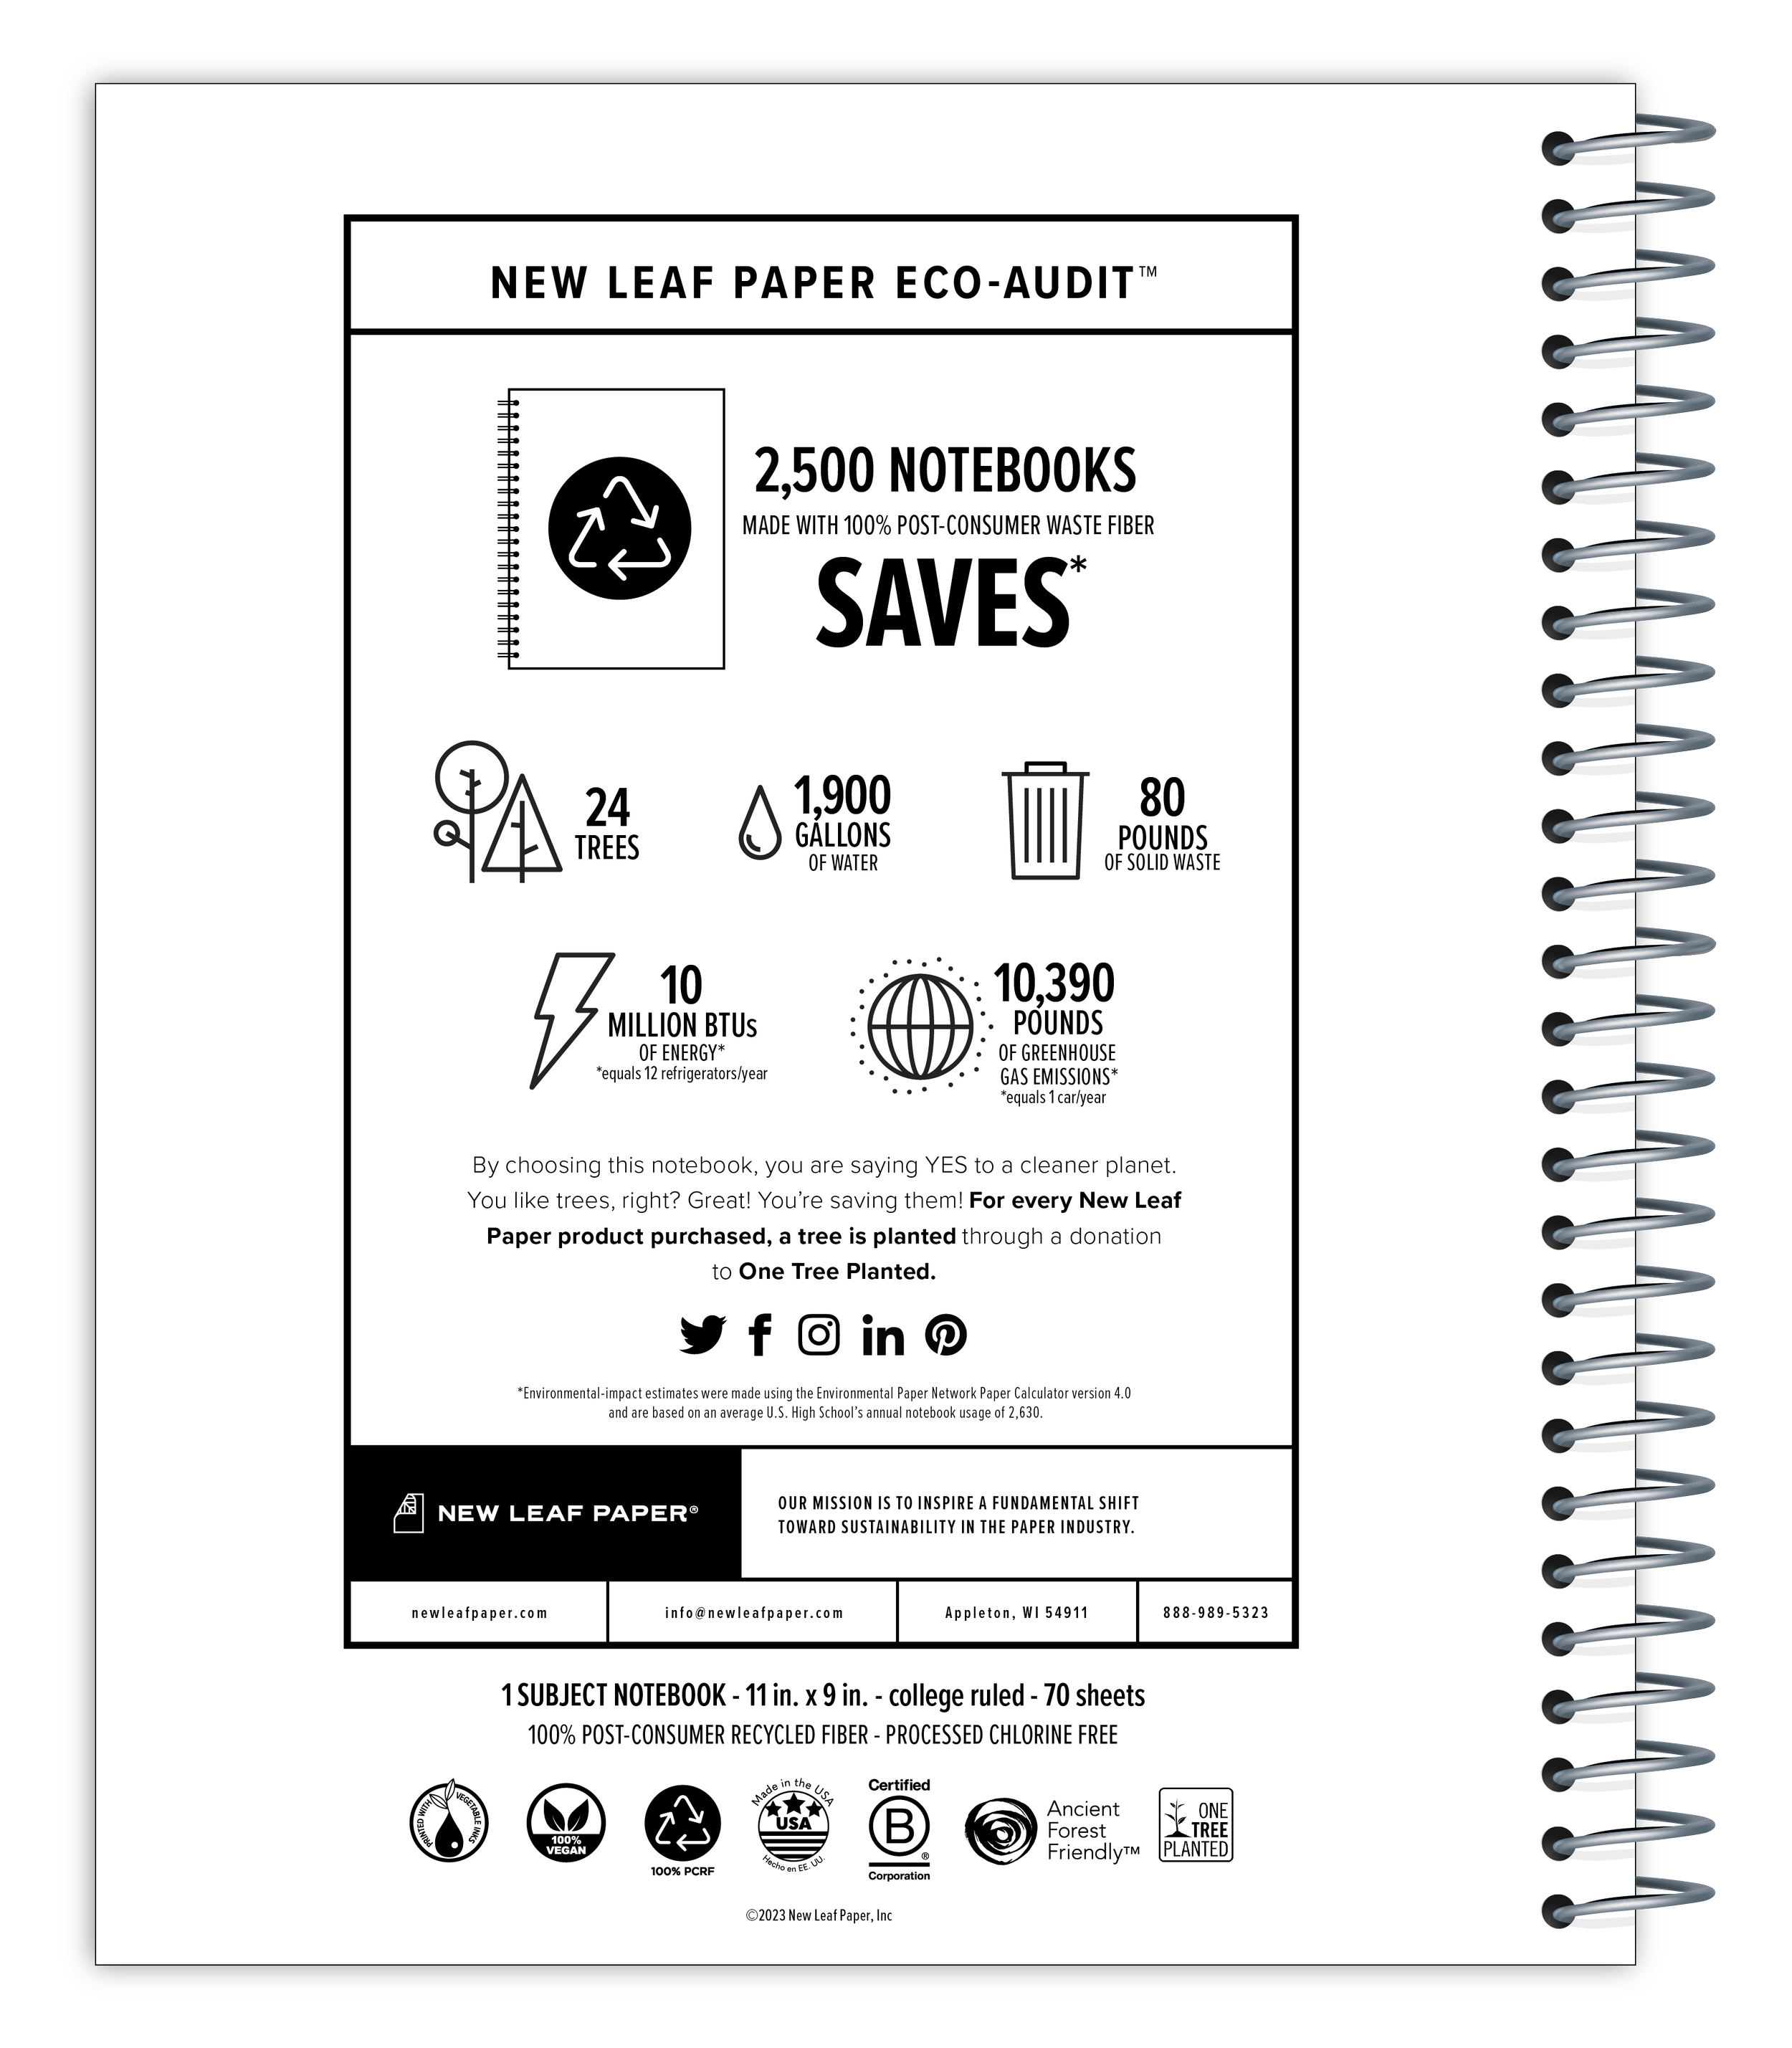 New Leaf Paper Habitat Series Notebooks